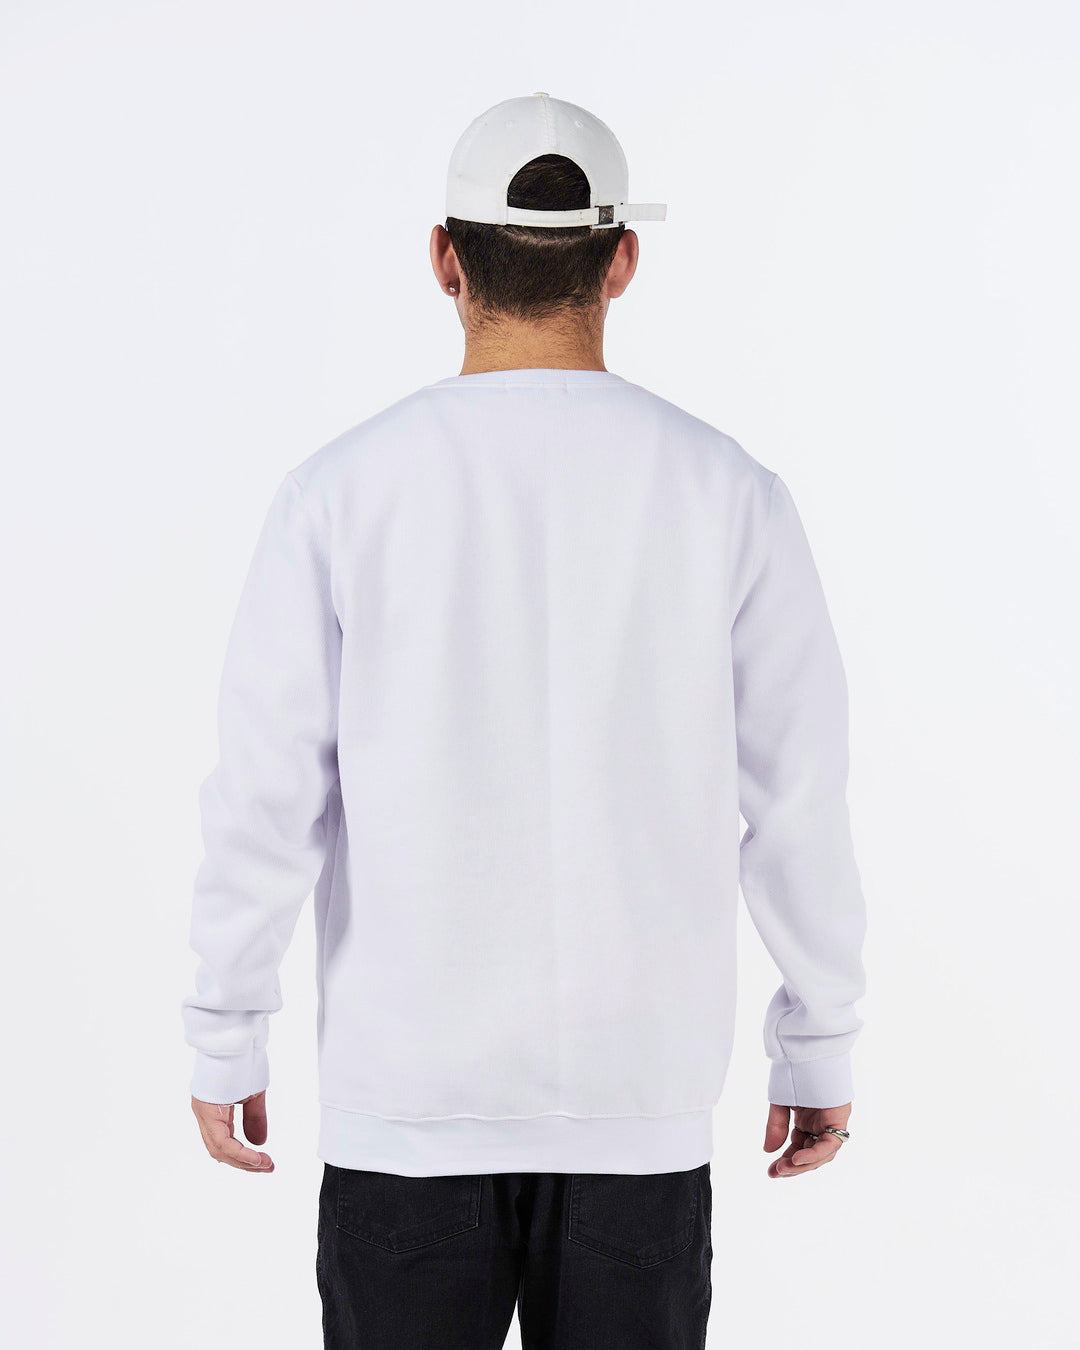 Sweatshirt - Solid White